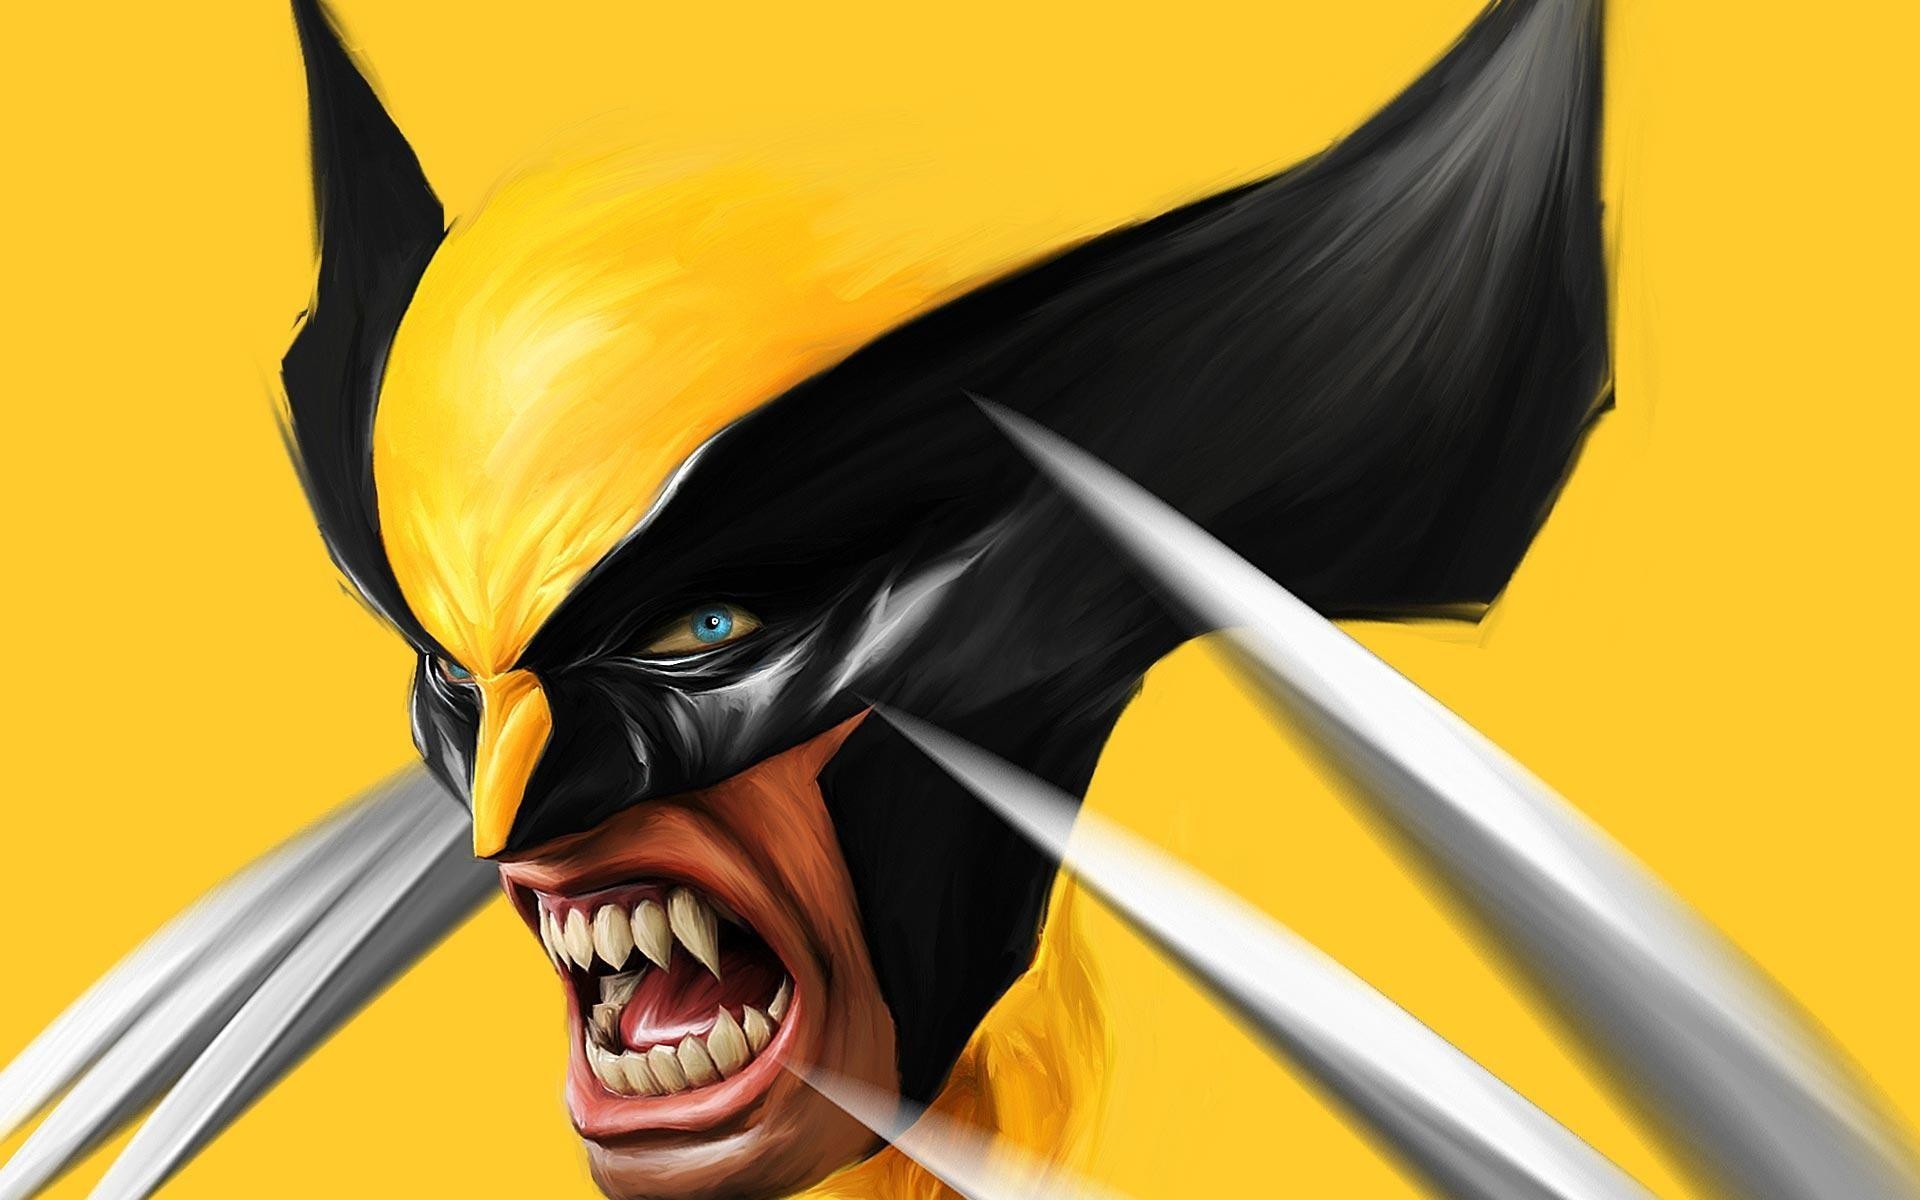 General 1920x1200 Marvel Comics adamantium claws superhero Wolverine comics antiheroes yellow background simple background artwork comic art X-Men